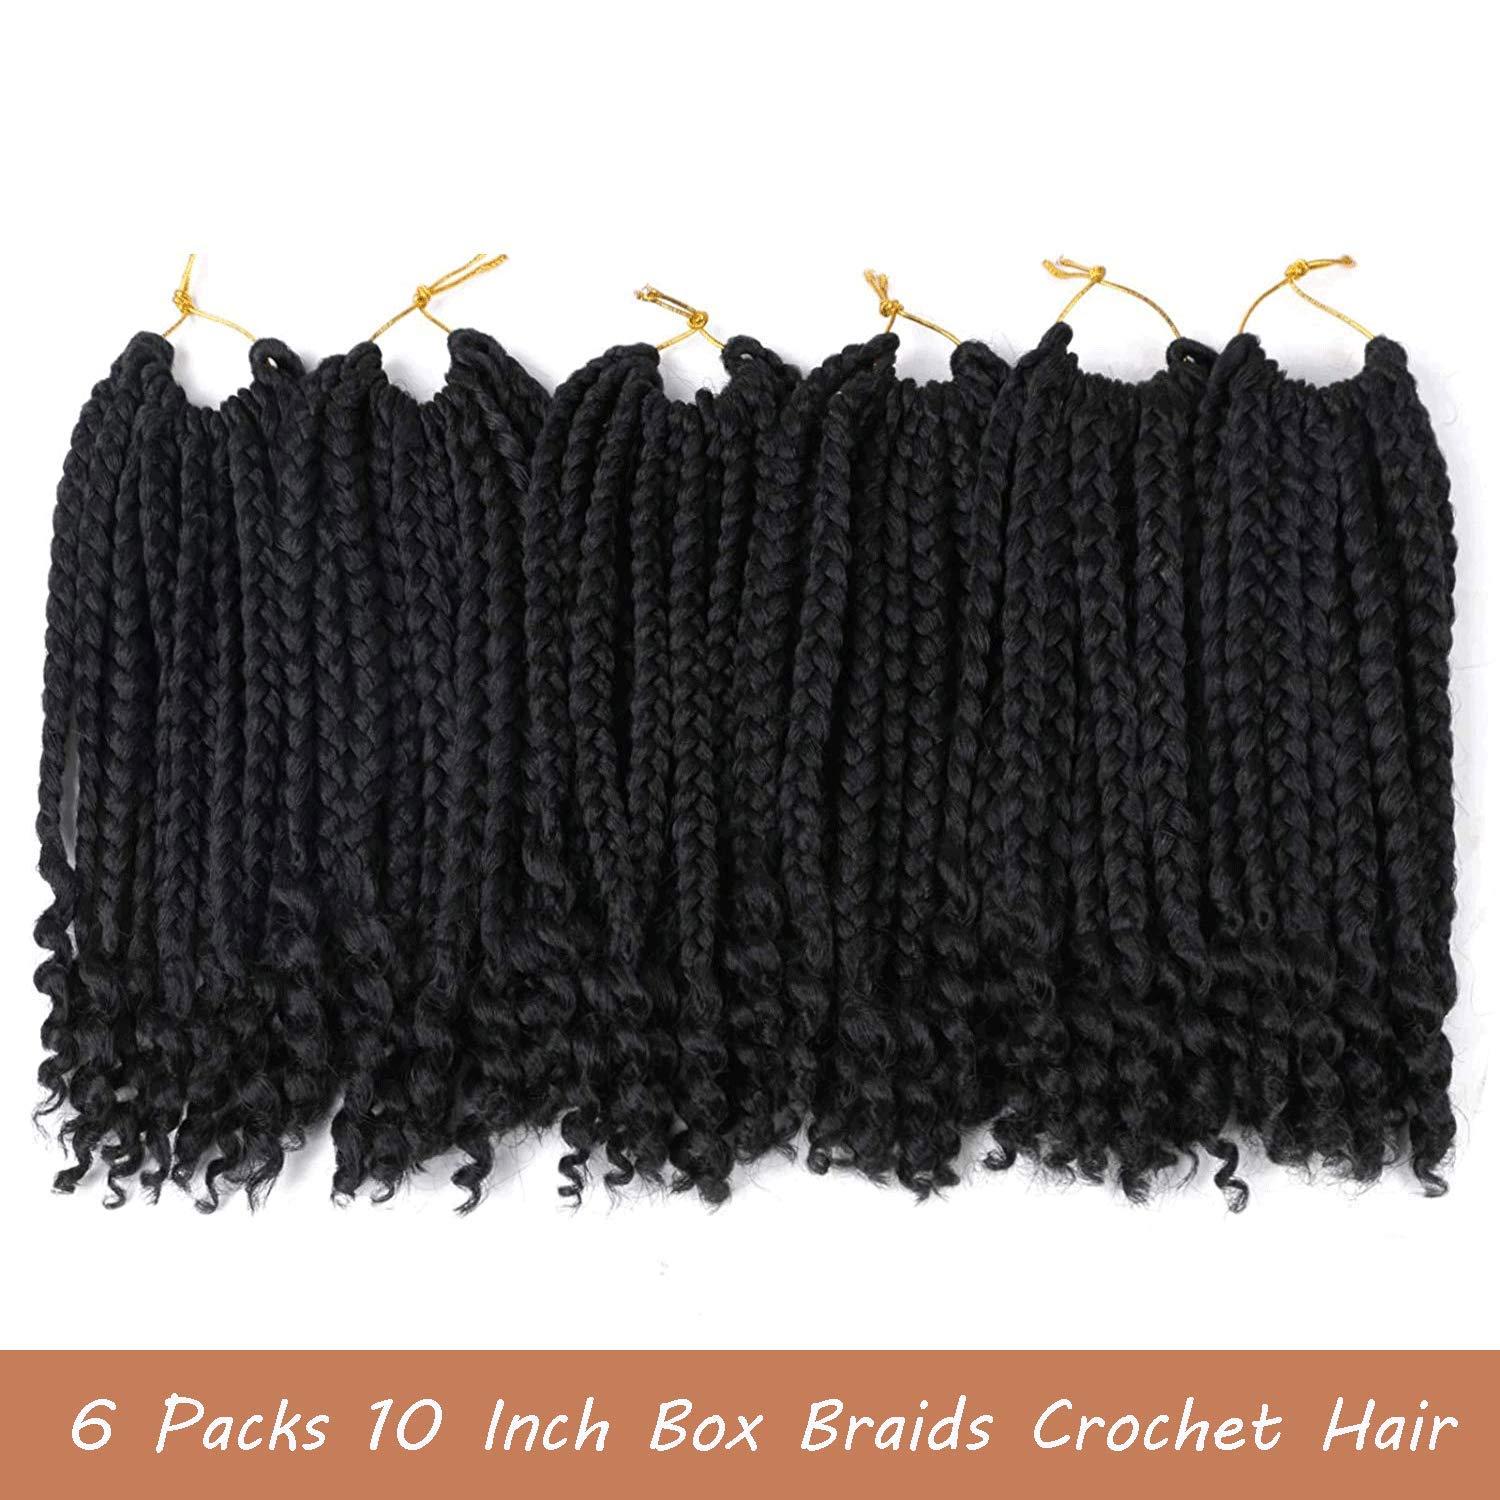 6 Packs Crochet Box Braids Curly Ends 10 Inch Crochet Braids Bohemian Box  Braids